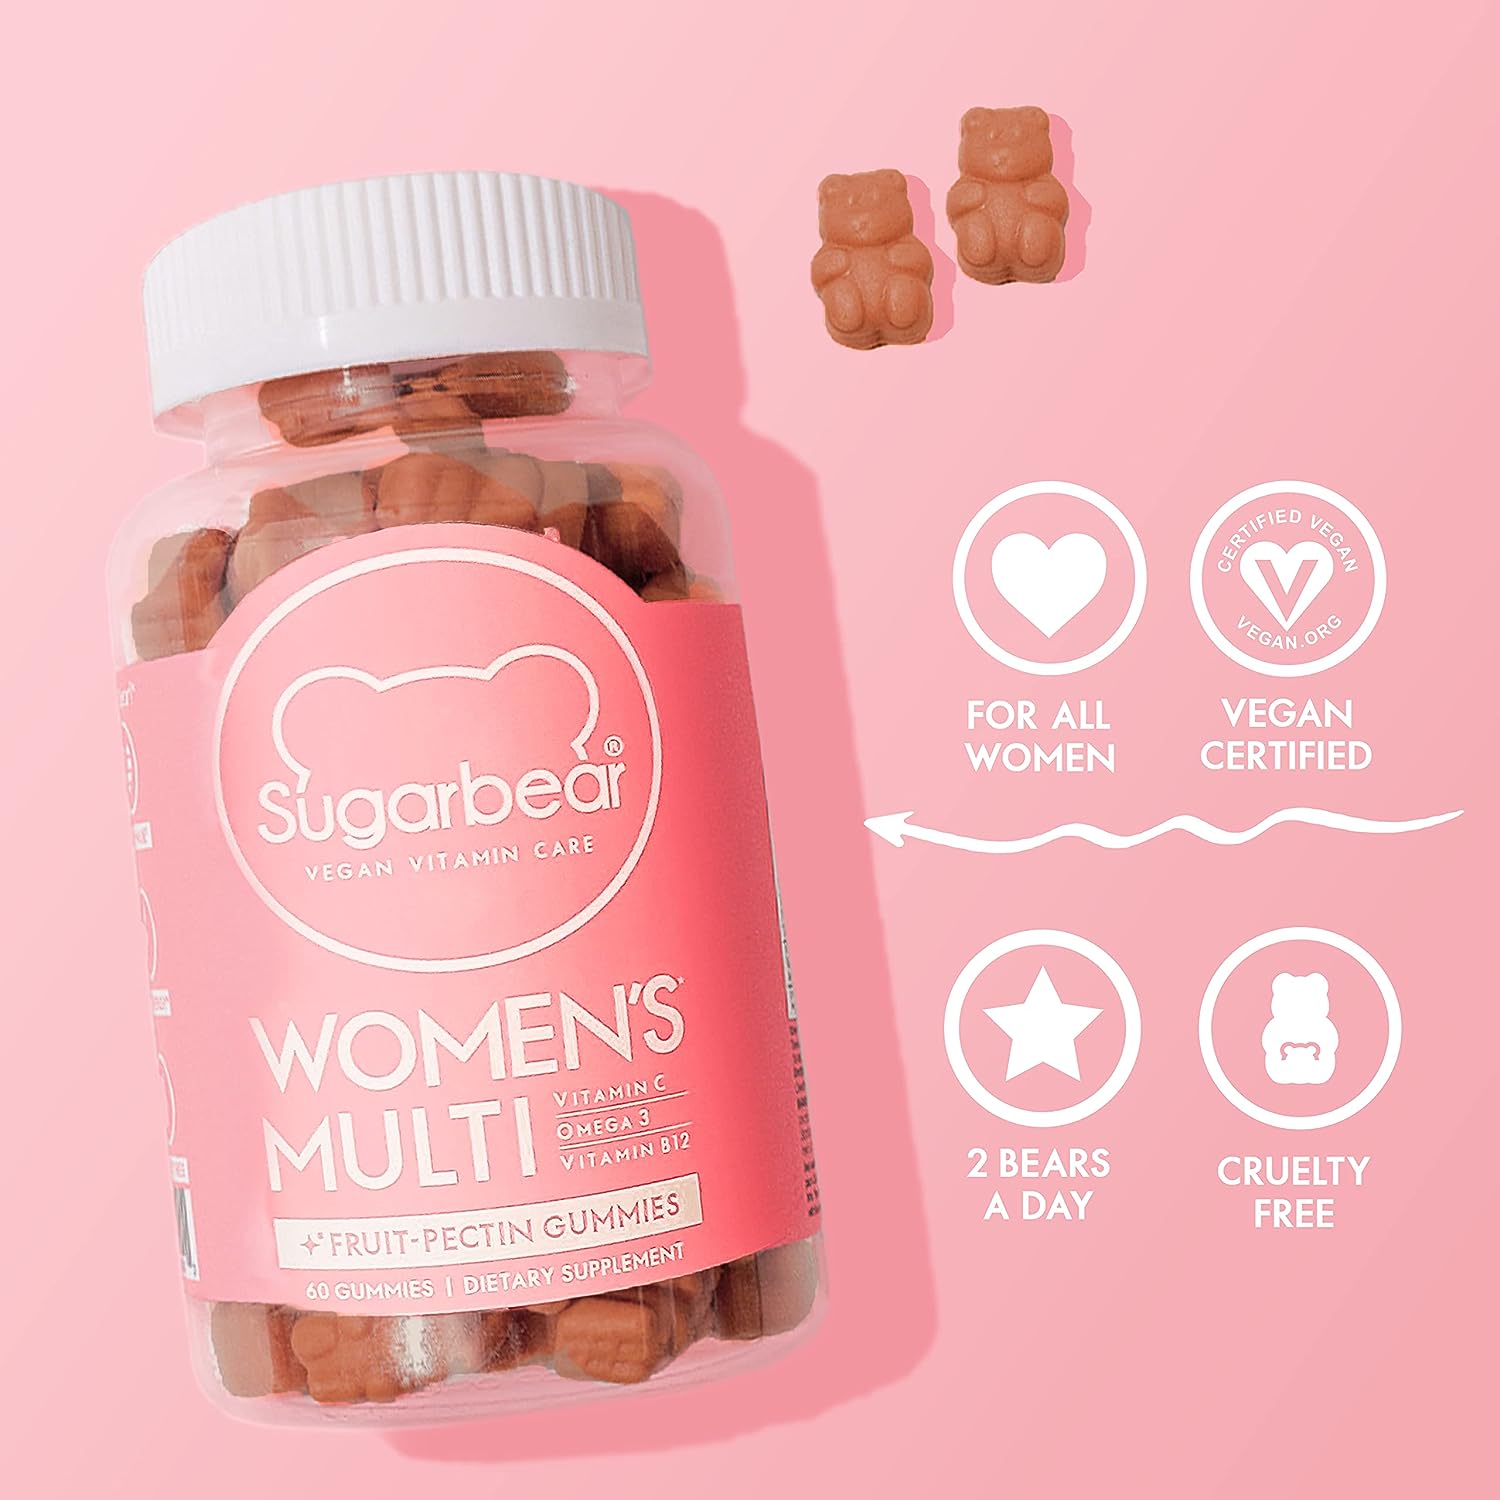 Sugarbear Women's MultiVitamin Gummies, Vegan Collagen Booster Blend with Glutathione, Omega-3, Folate, Biotin - Gummy Supplements for Women (60 ct) : Health & Household